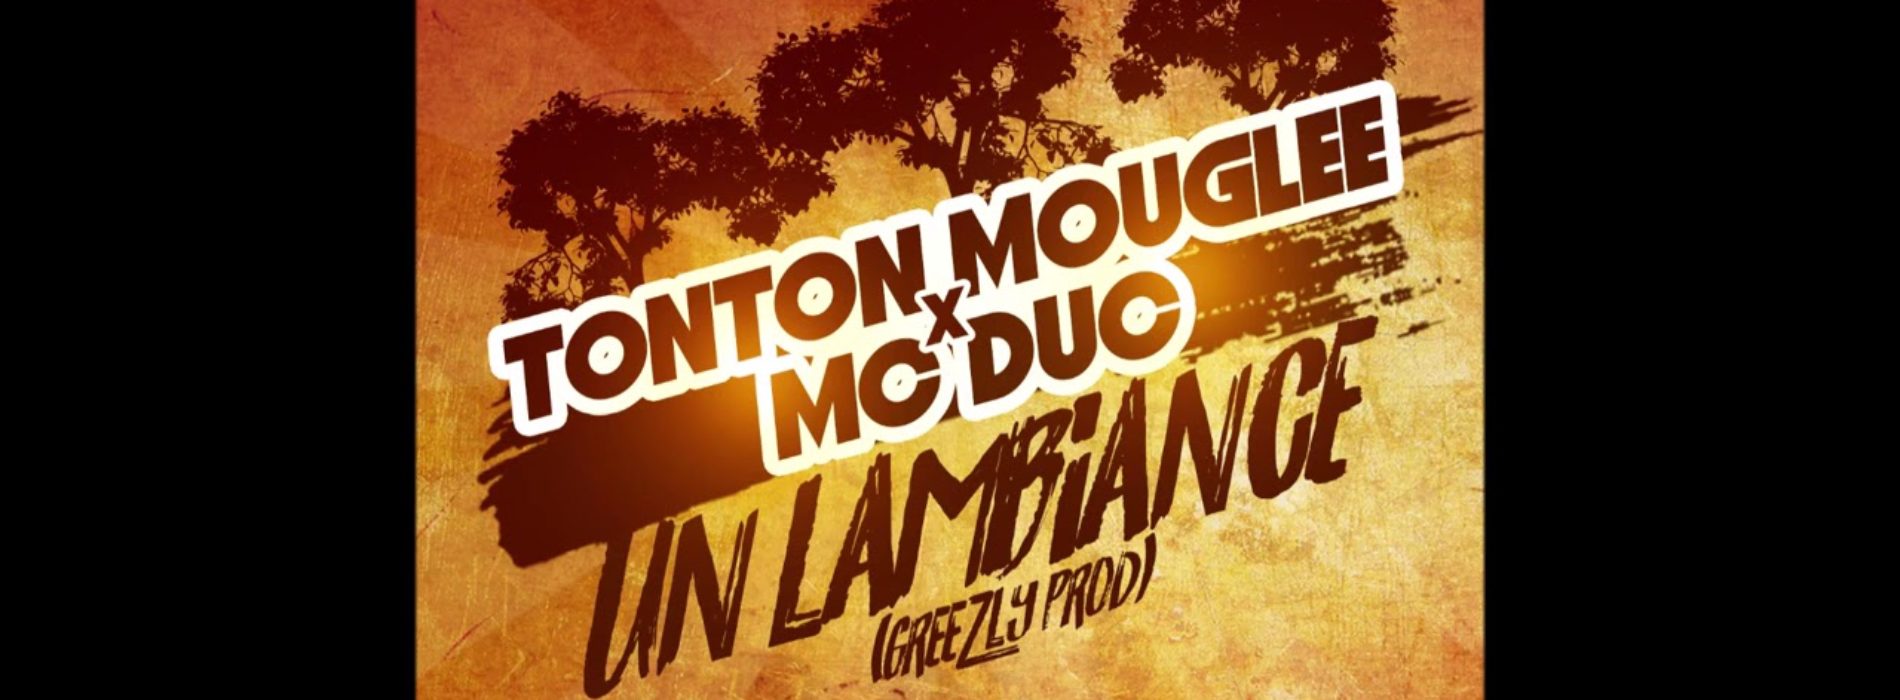 TONTON MOUGLEE x MC DUC – UN LAMBIANCE (GREEZLY PROD) – Août 2020